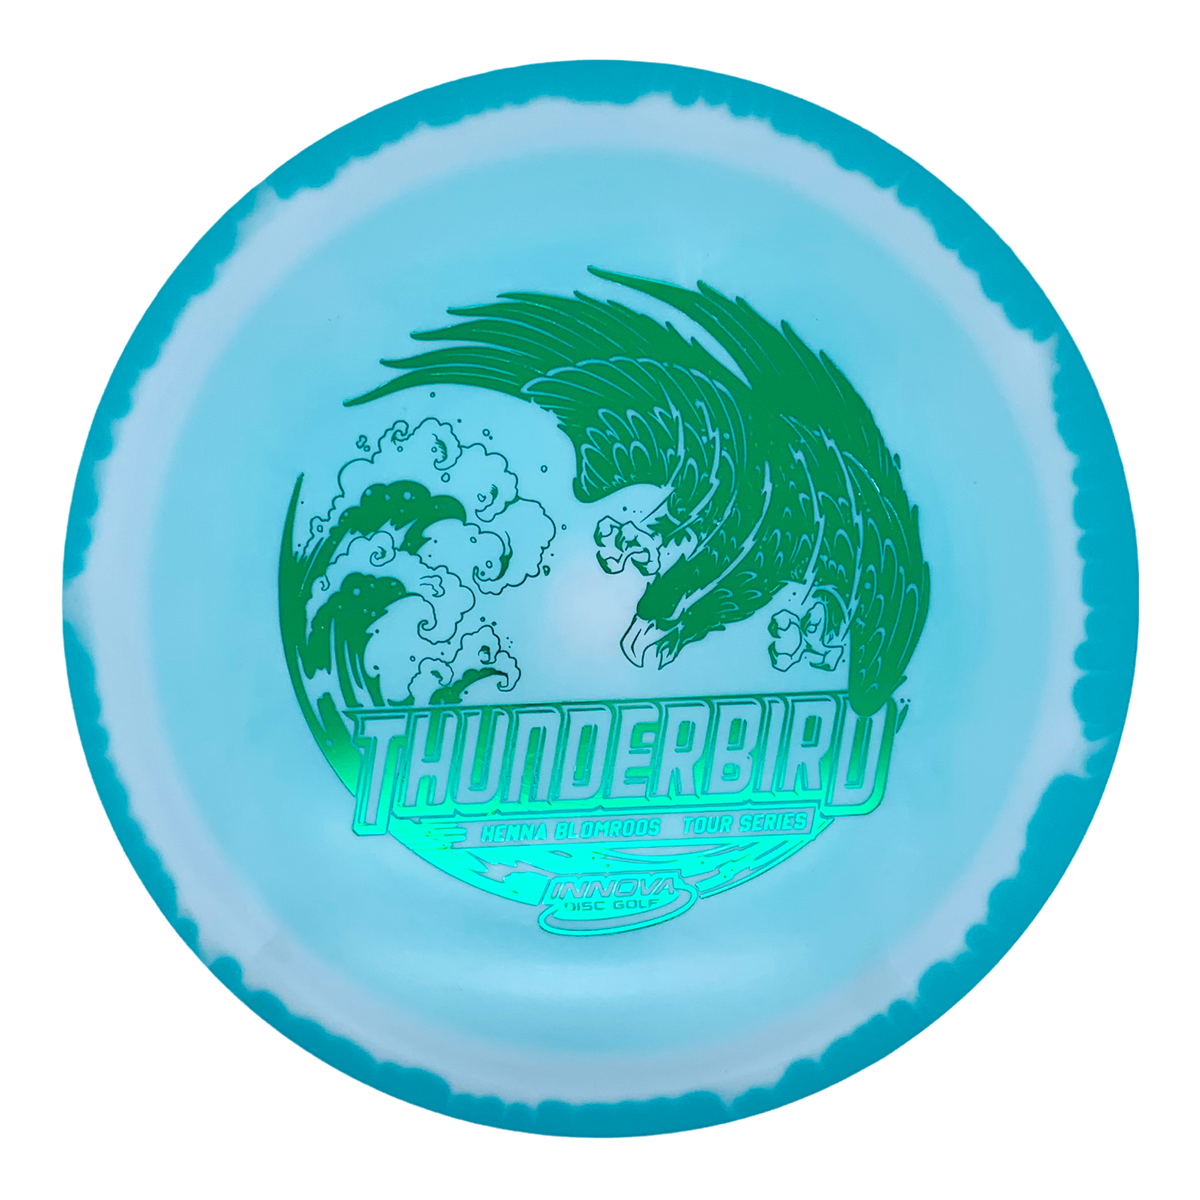 Innova Halo Star Thunderbird - Henna Blomroos Tour Series